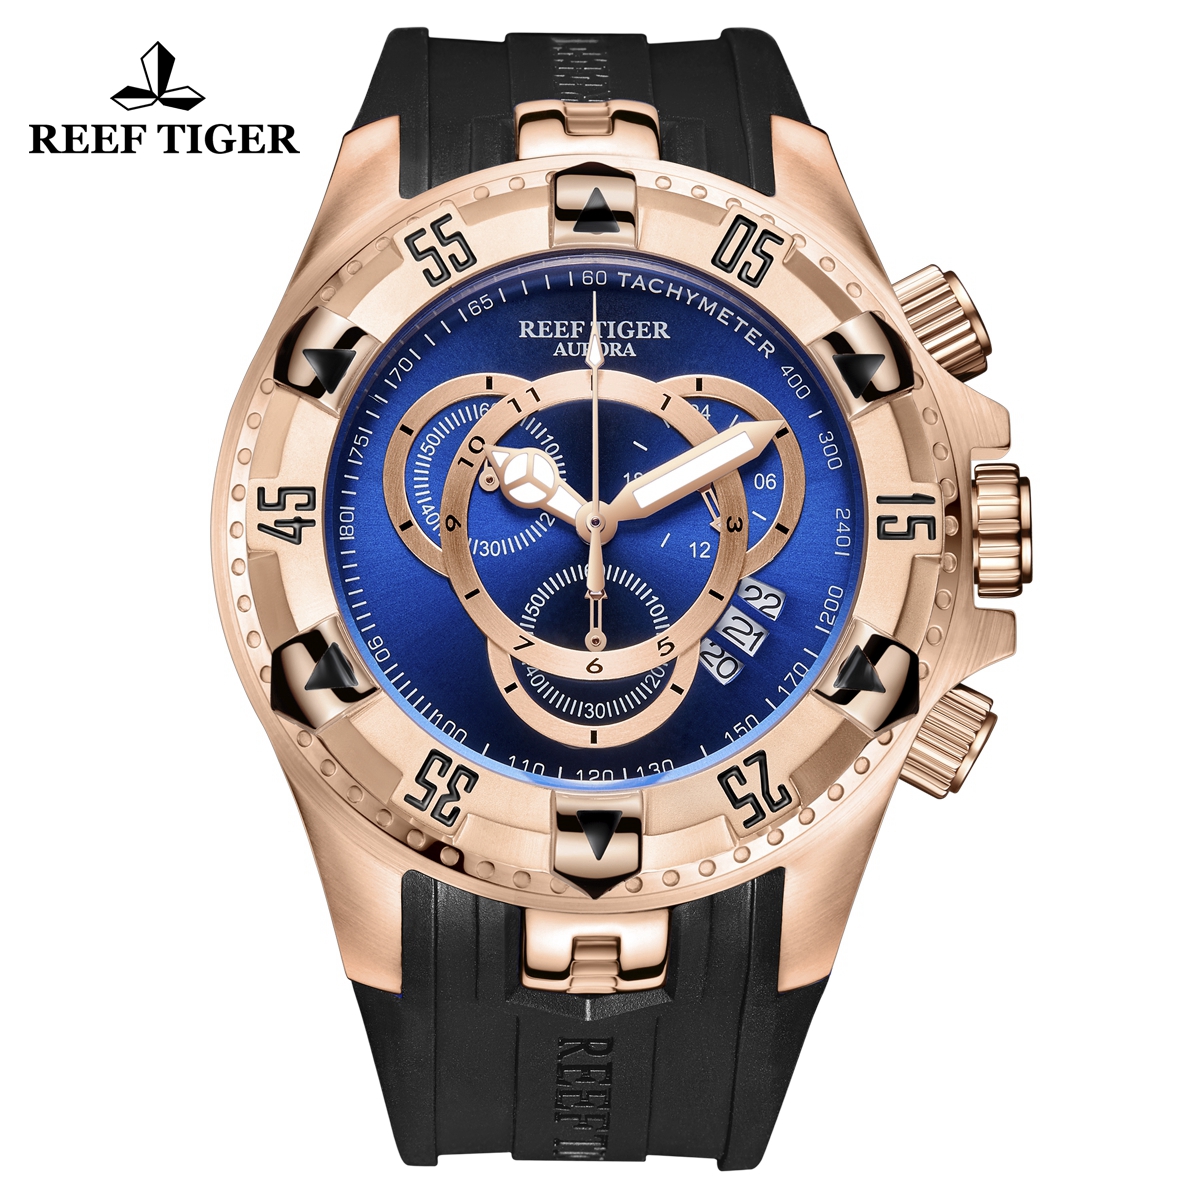 Reef Tiger Aurora Hercules II Fashion Rose Gold Rubber Strap Blue Dial Quartz Watch RGA303-2-PLB